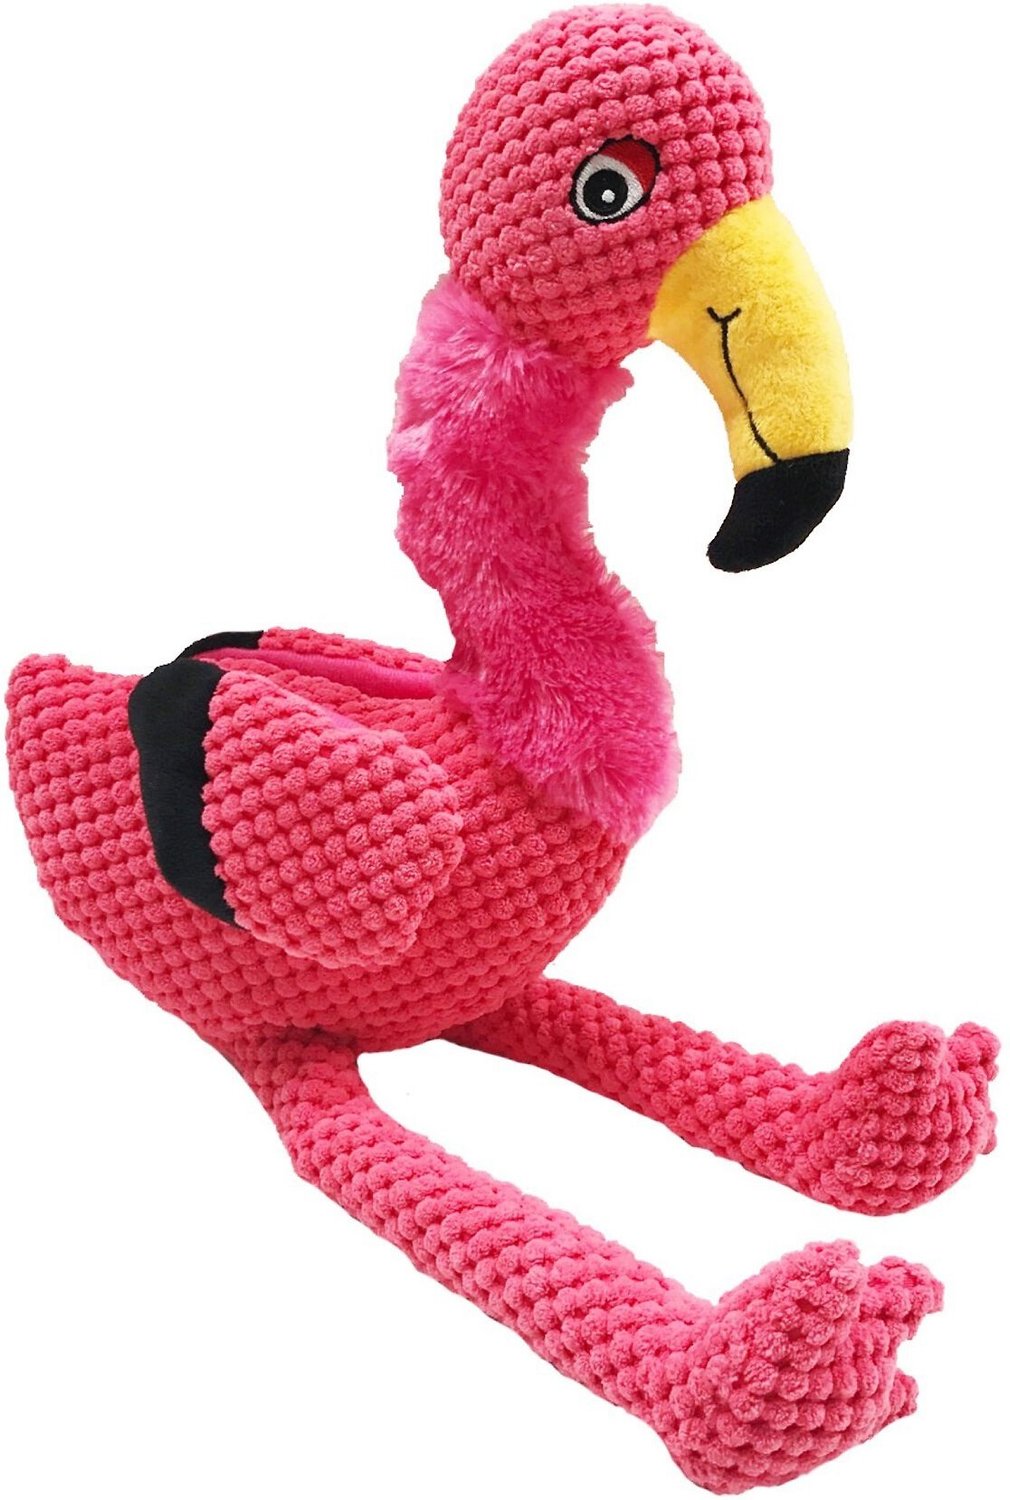 FAB DOG Floppy Flamingo Squeaky Plush 